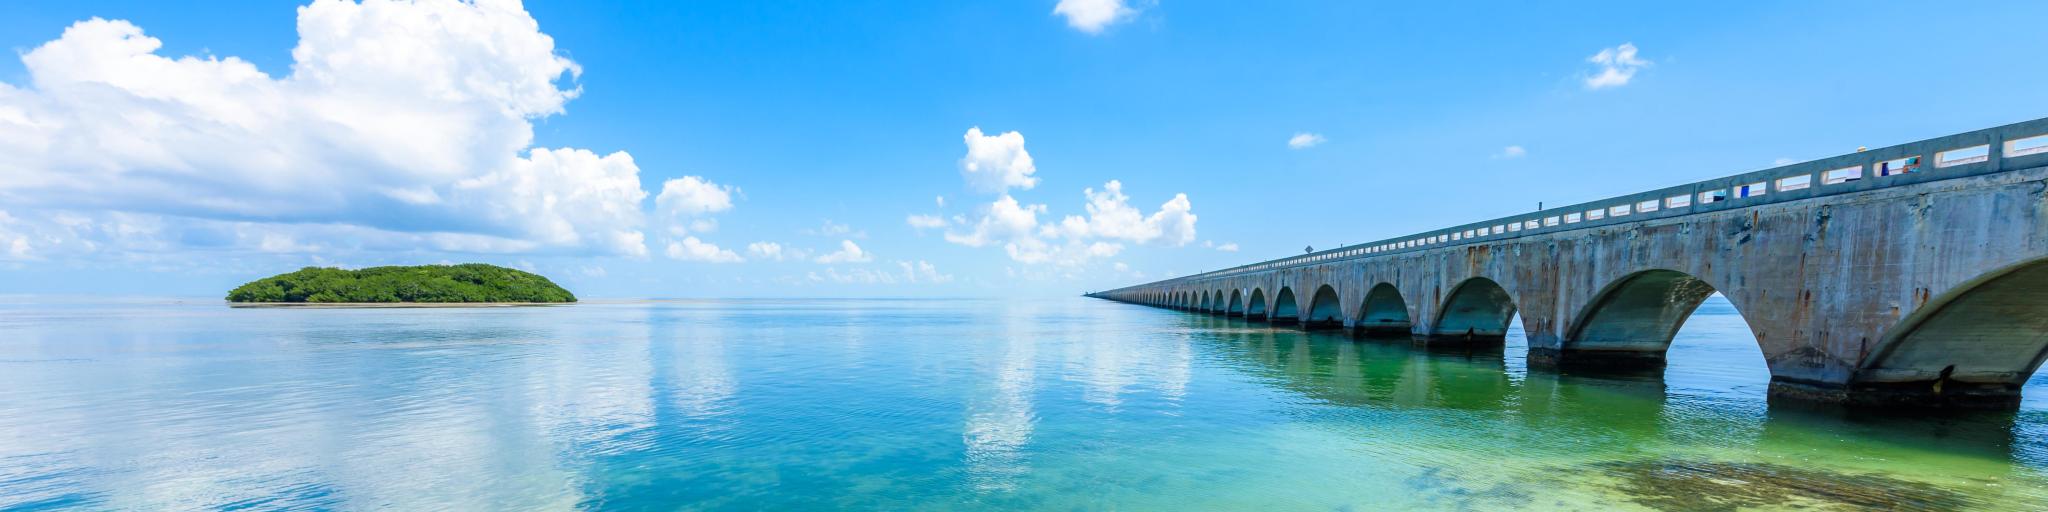 Long Bridge at Florida Keys - Historic Overseas Highway And 7 Mile Bridge to get to Key West, Florida, USA